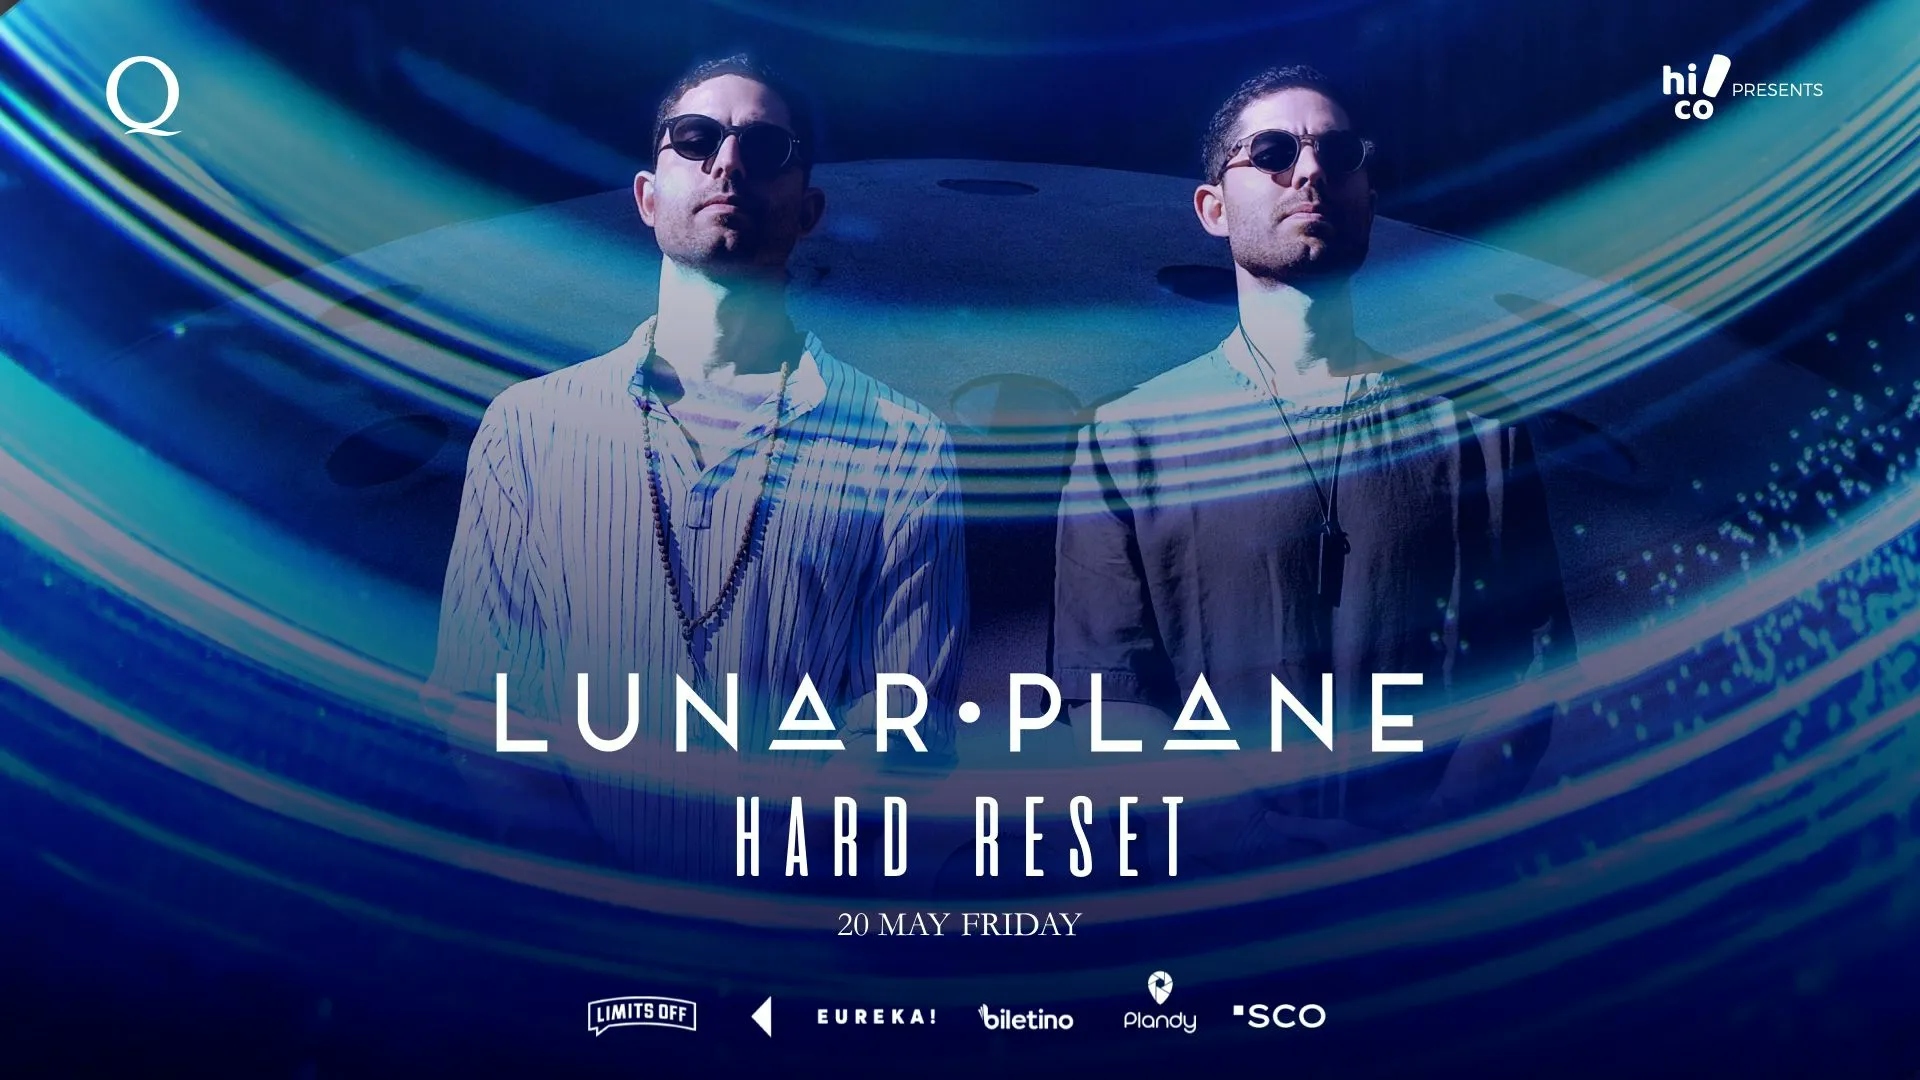 hi!co Presents: Lunar Plane & Hard Reset